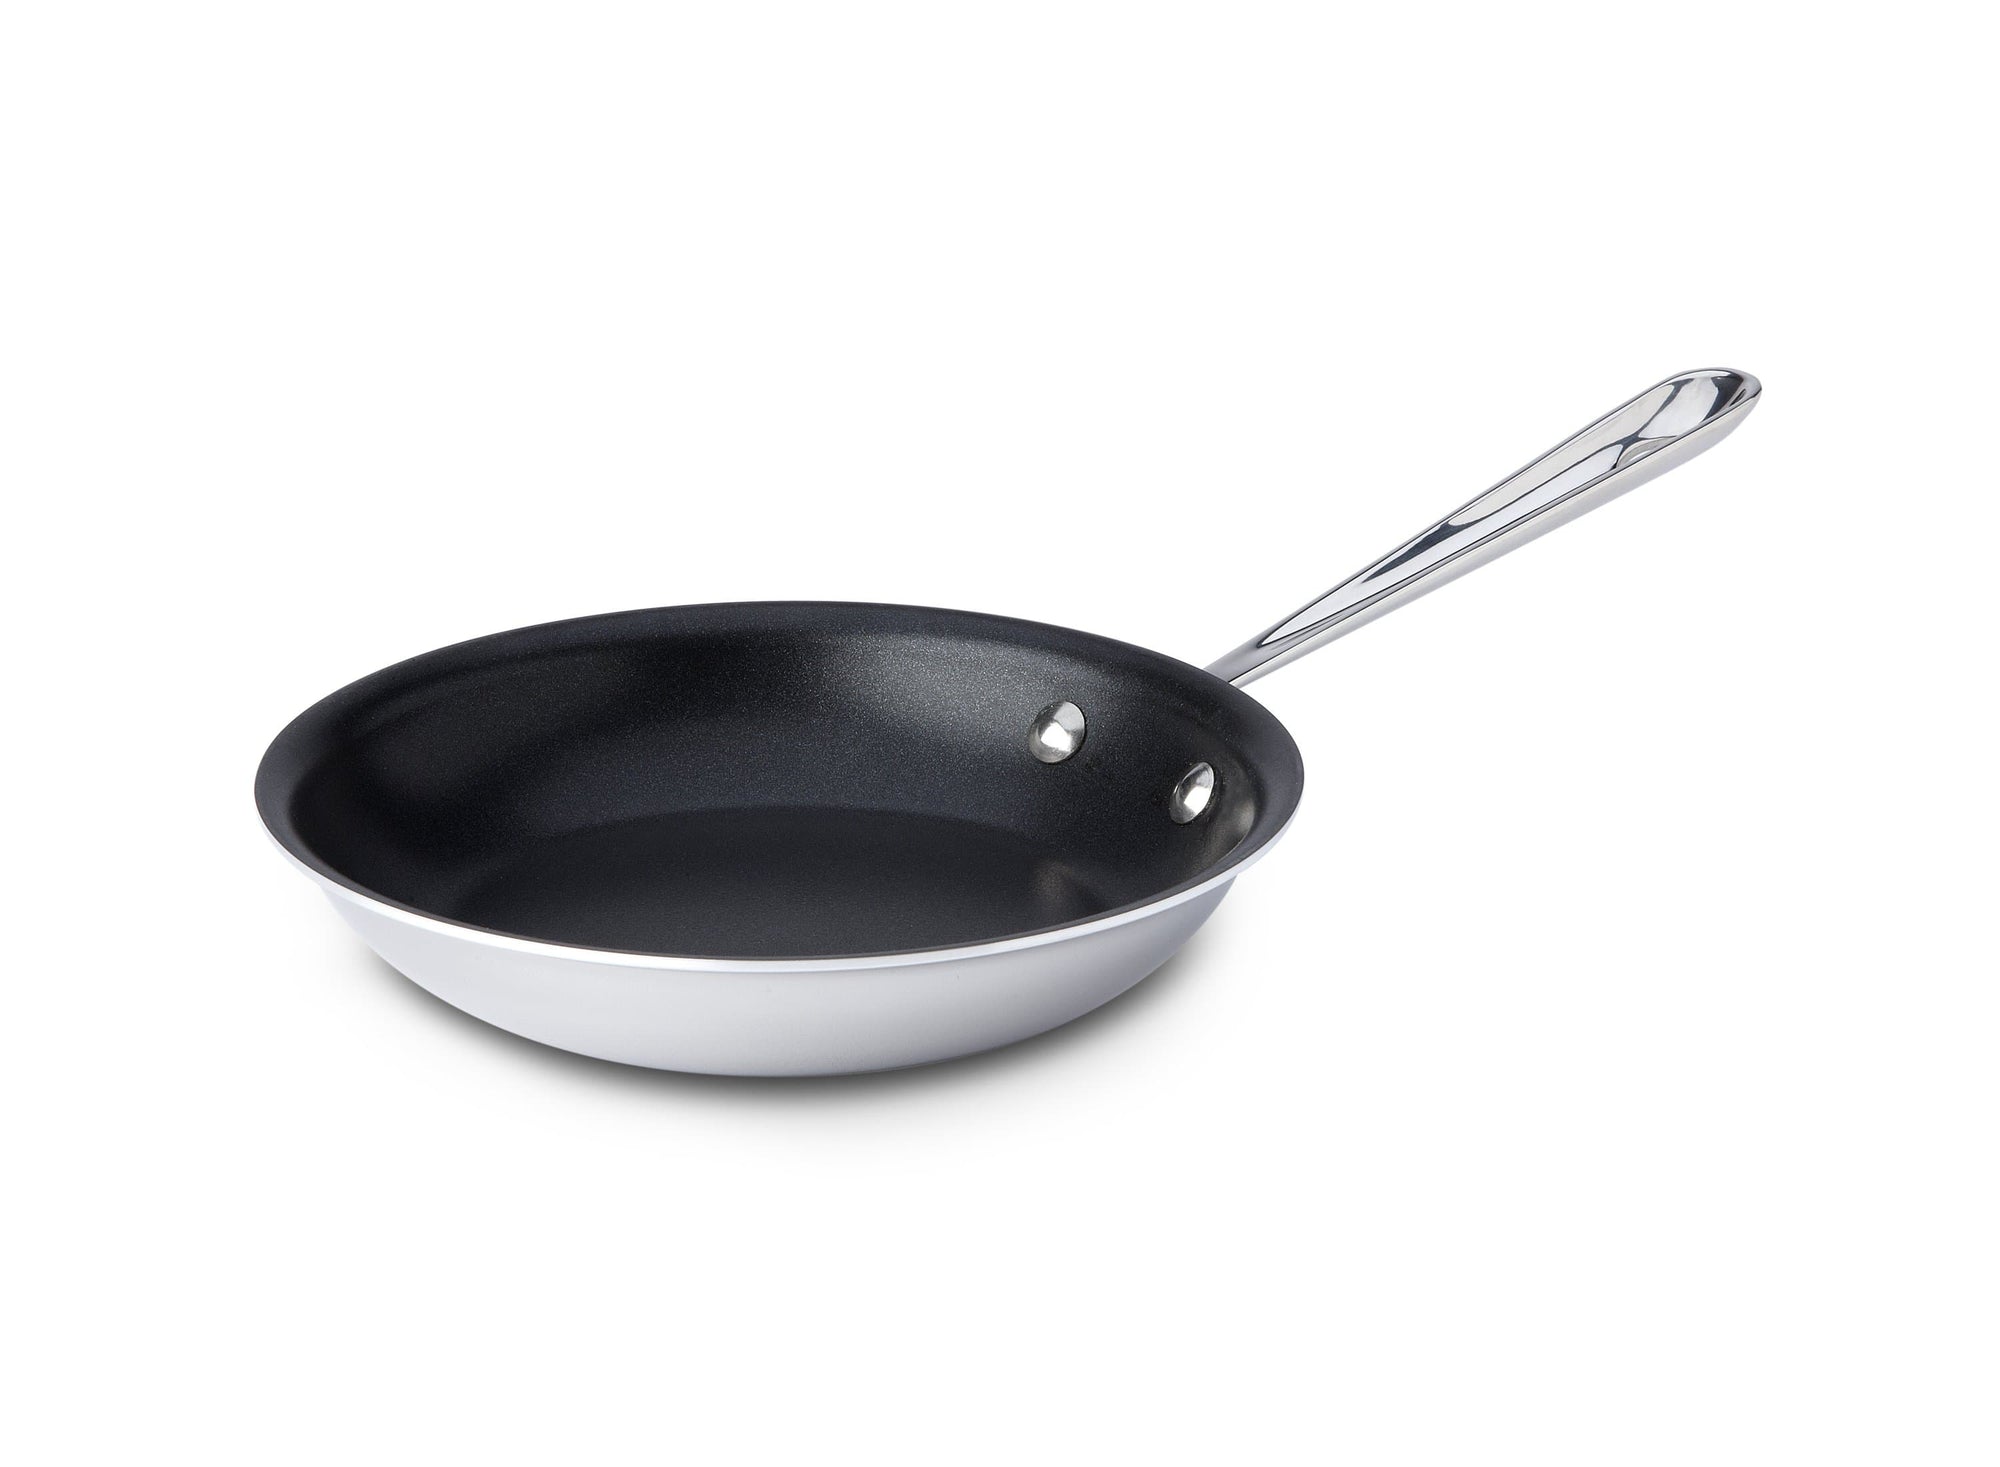 Kyocera 10 Fry Pan, 10 inch, Black Aluminum Ceramic Coated Nonstick